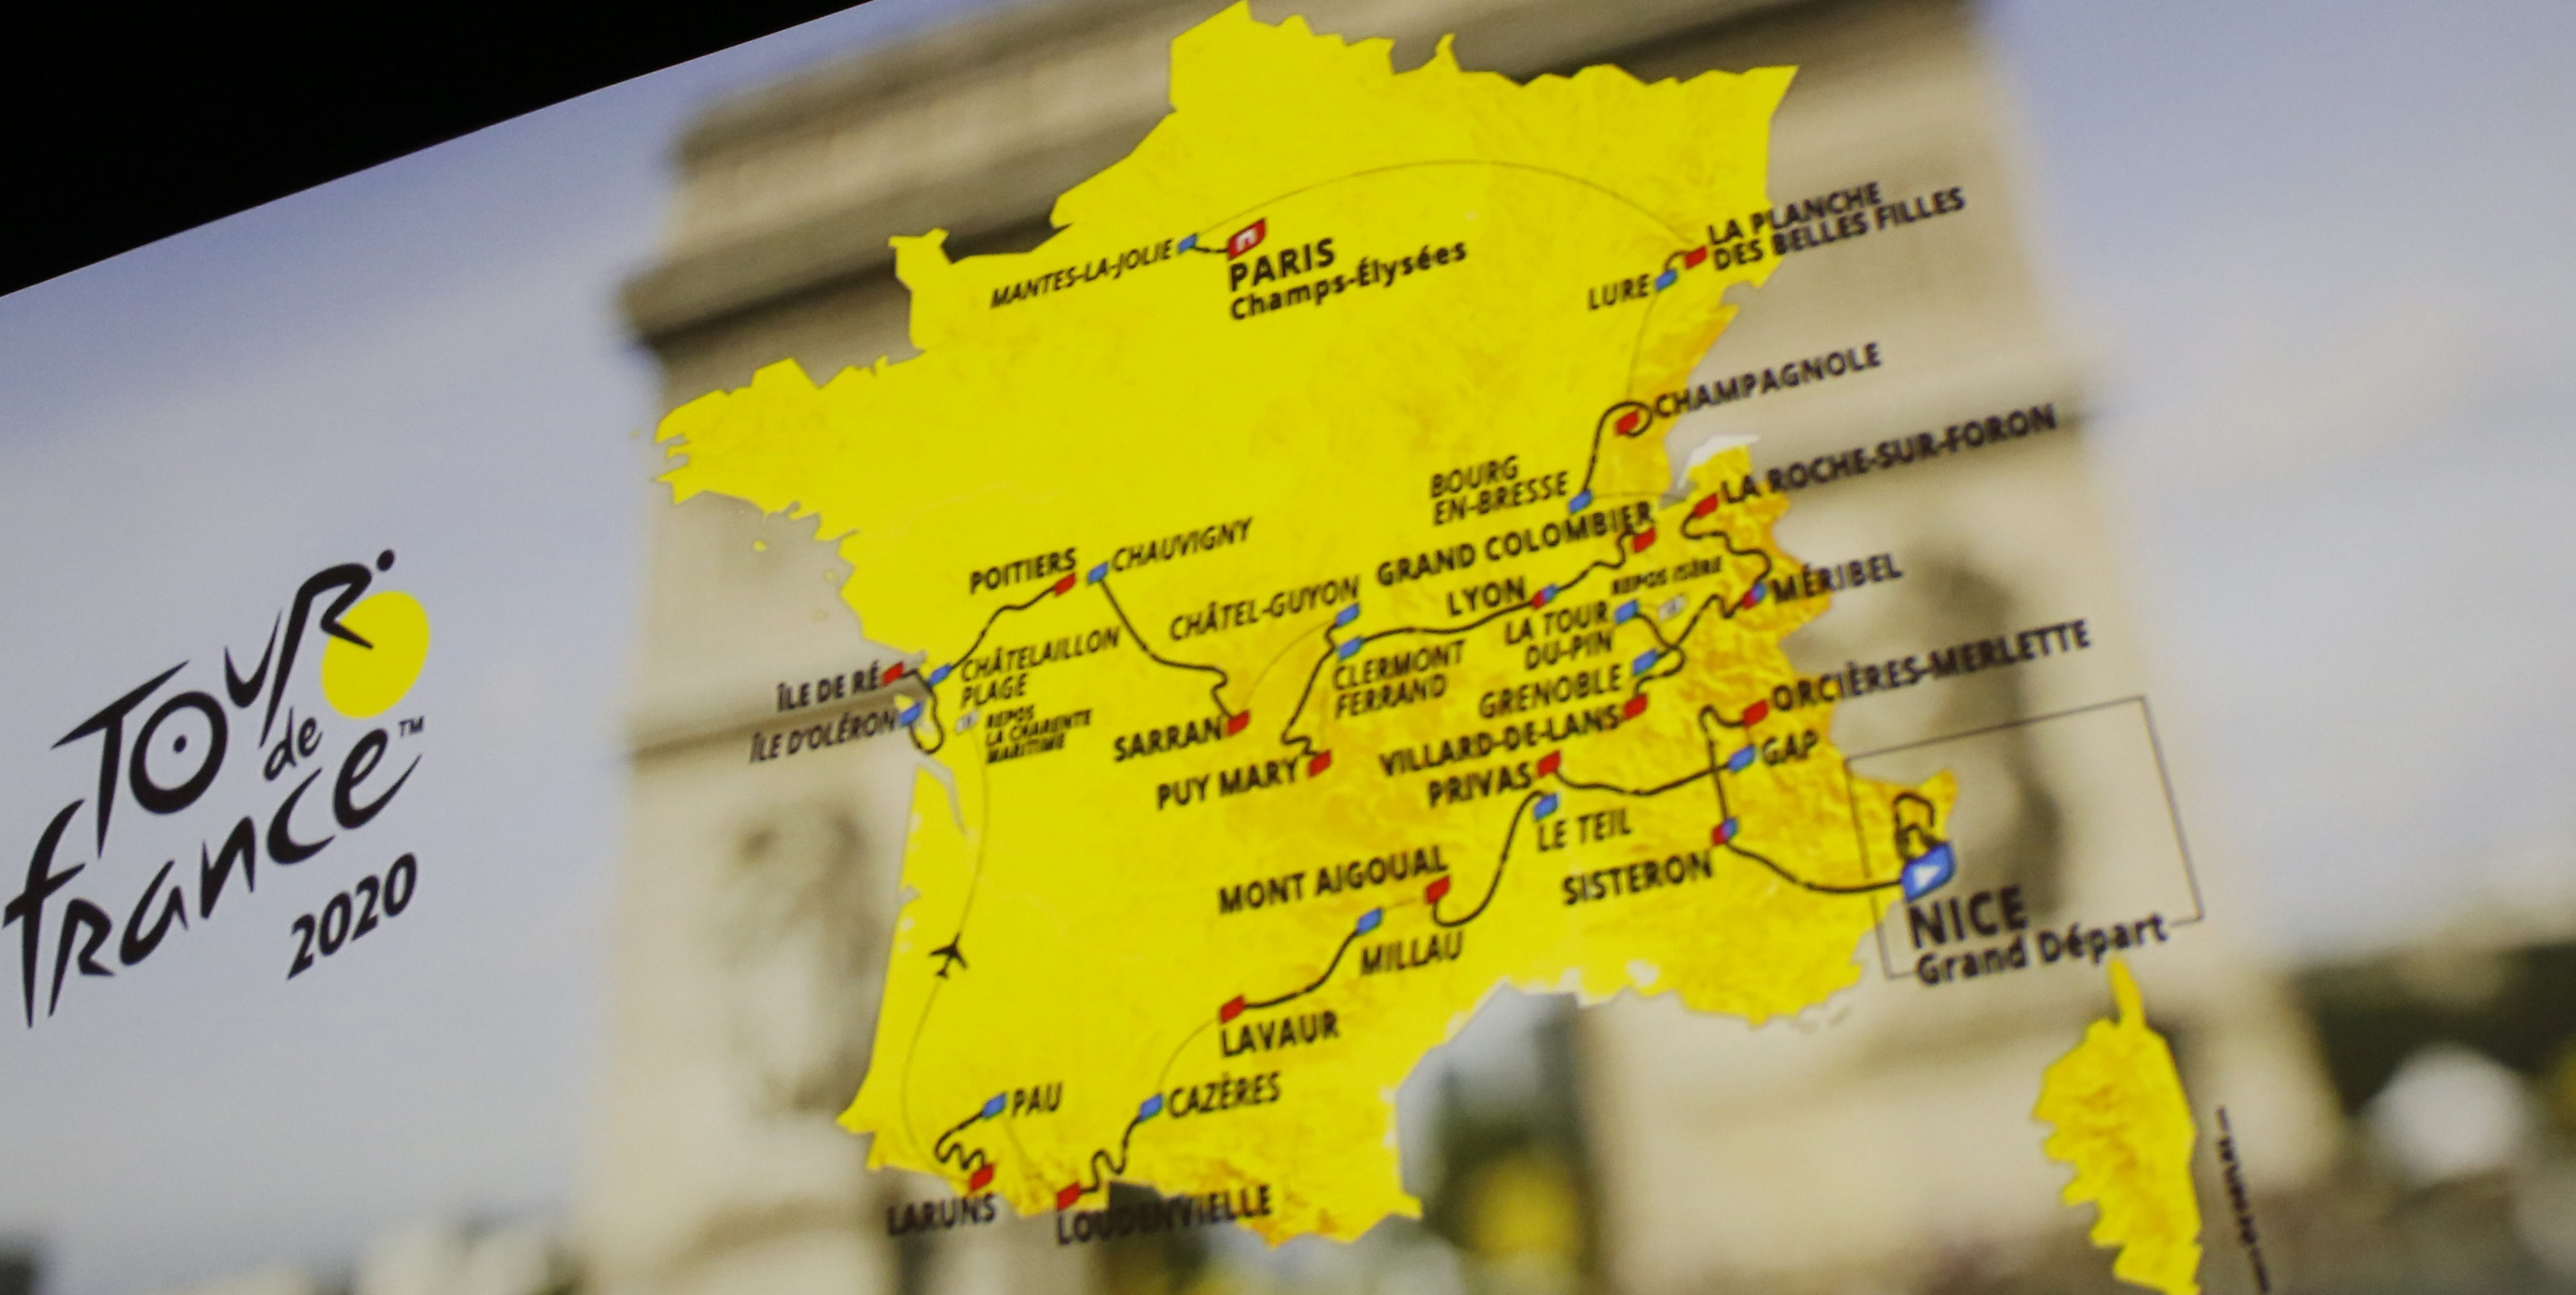 Tour de France 2020 / Teilnehmer erwartet Kletterpartie